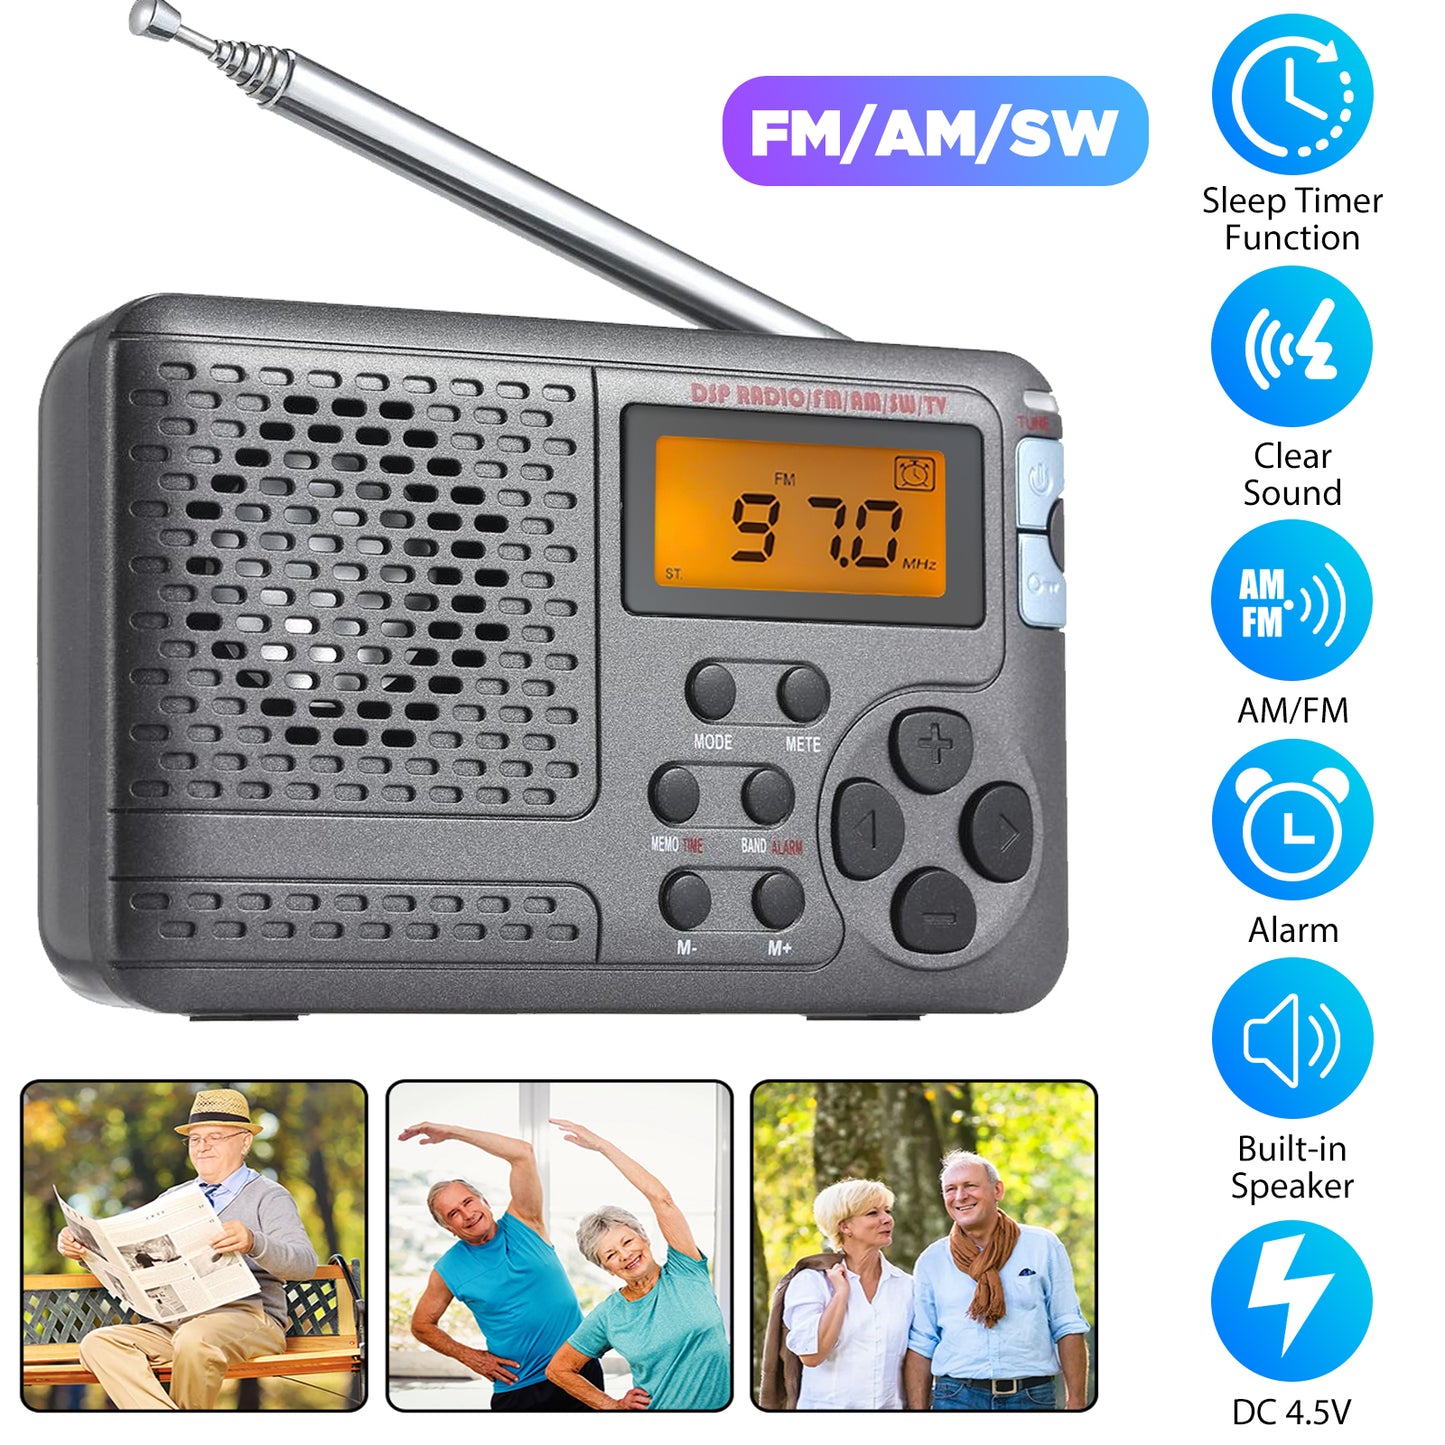 Portable FM/AM/SW Multiband Radio - LCD display Alarm Clock Radio,Stereo Mode Portable Radio Digital Speaker Receiver